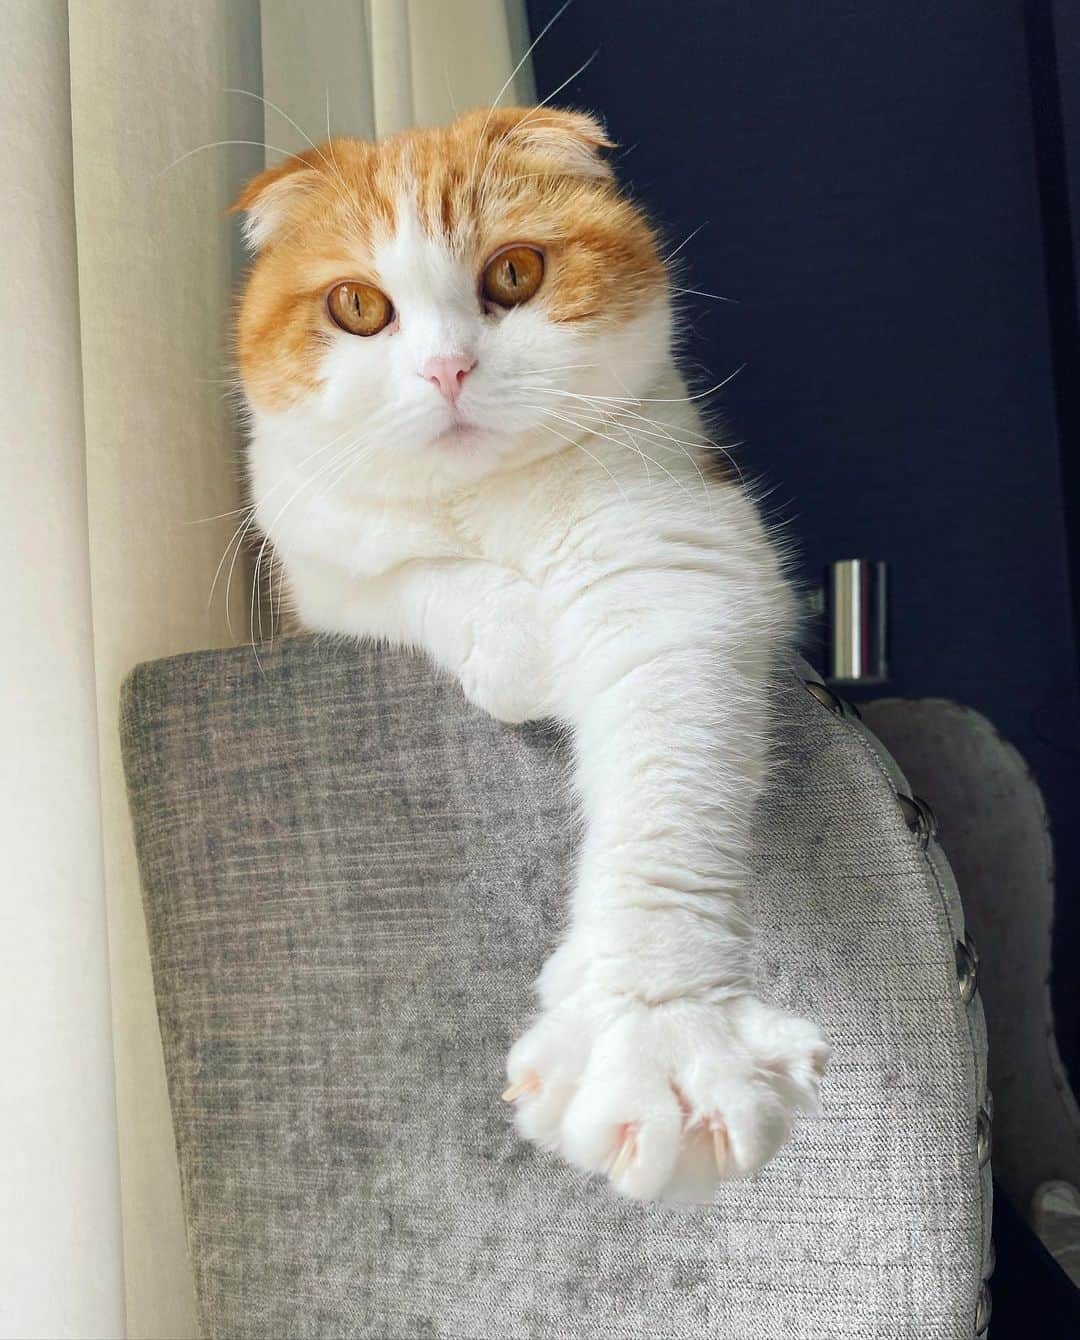 Nana _The Scottish Foldのインスタグラム：「summer manicure plz human! 여름스탈 매니큐어 부탁한다옹🦁 . . . #고양이 #猫 #ねこ #スコ #cat #cats #catstagram #catsofinstagram #instagramcats #instacat #bestmeow #catoftheday #catsofworld #catsloversworld #catsofday #냥스타그램 #또앙 #귀여워 #냥이 #caturday #gatos #cats_of_instagram #ilovemycat #catselfie #kittensofinstagram #kittens #catsdaily #kucing #london」